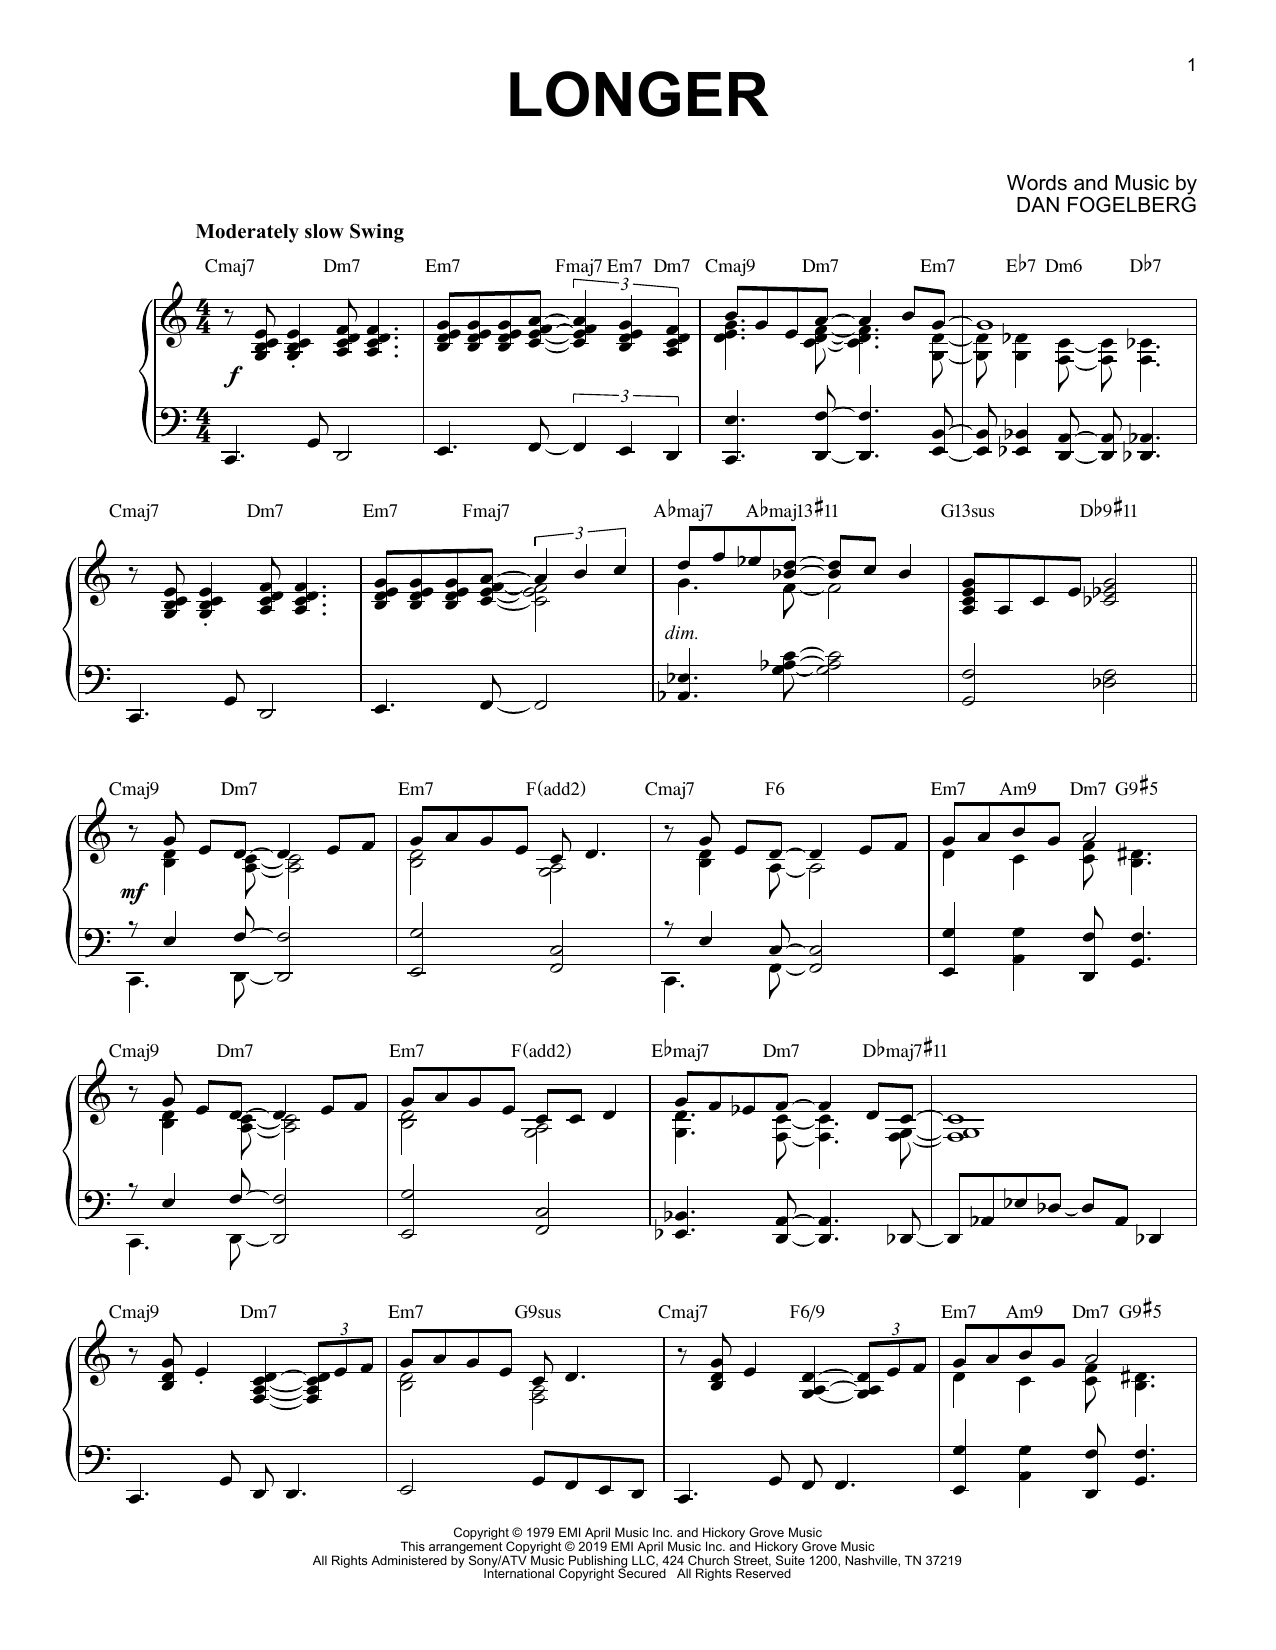 Dan Fogelberg Longer [Jazz version] Sheet Music Notes & Chords for Piano Solo - Download or Print PDF